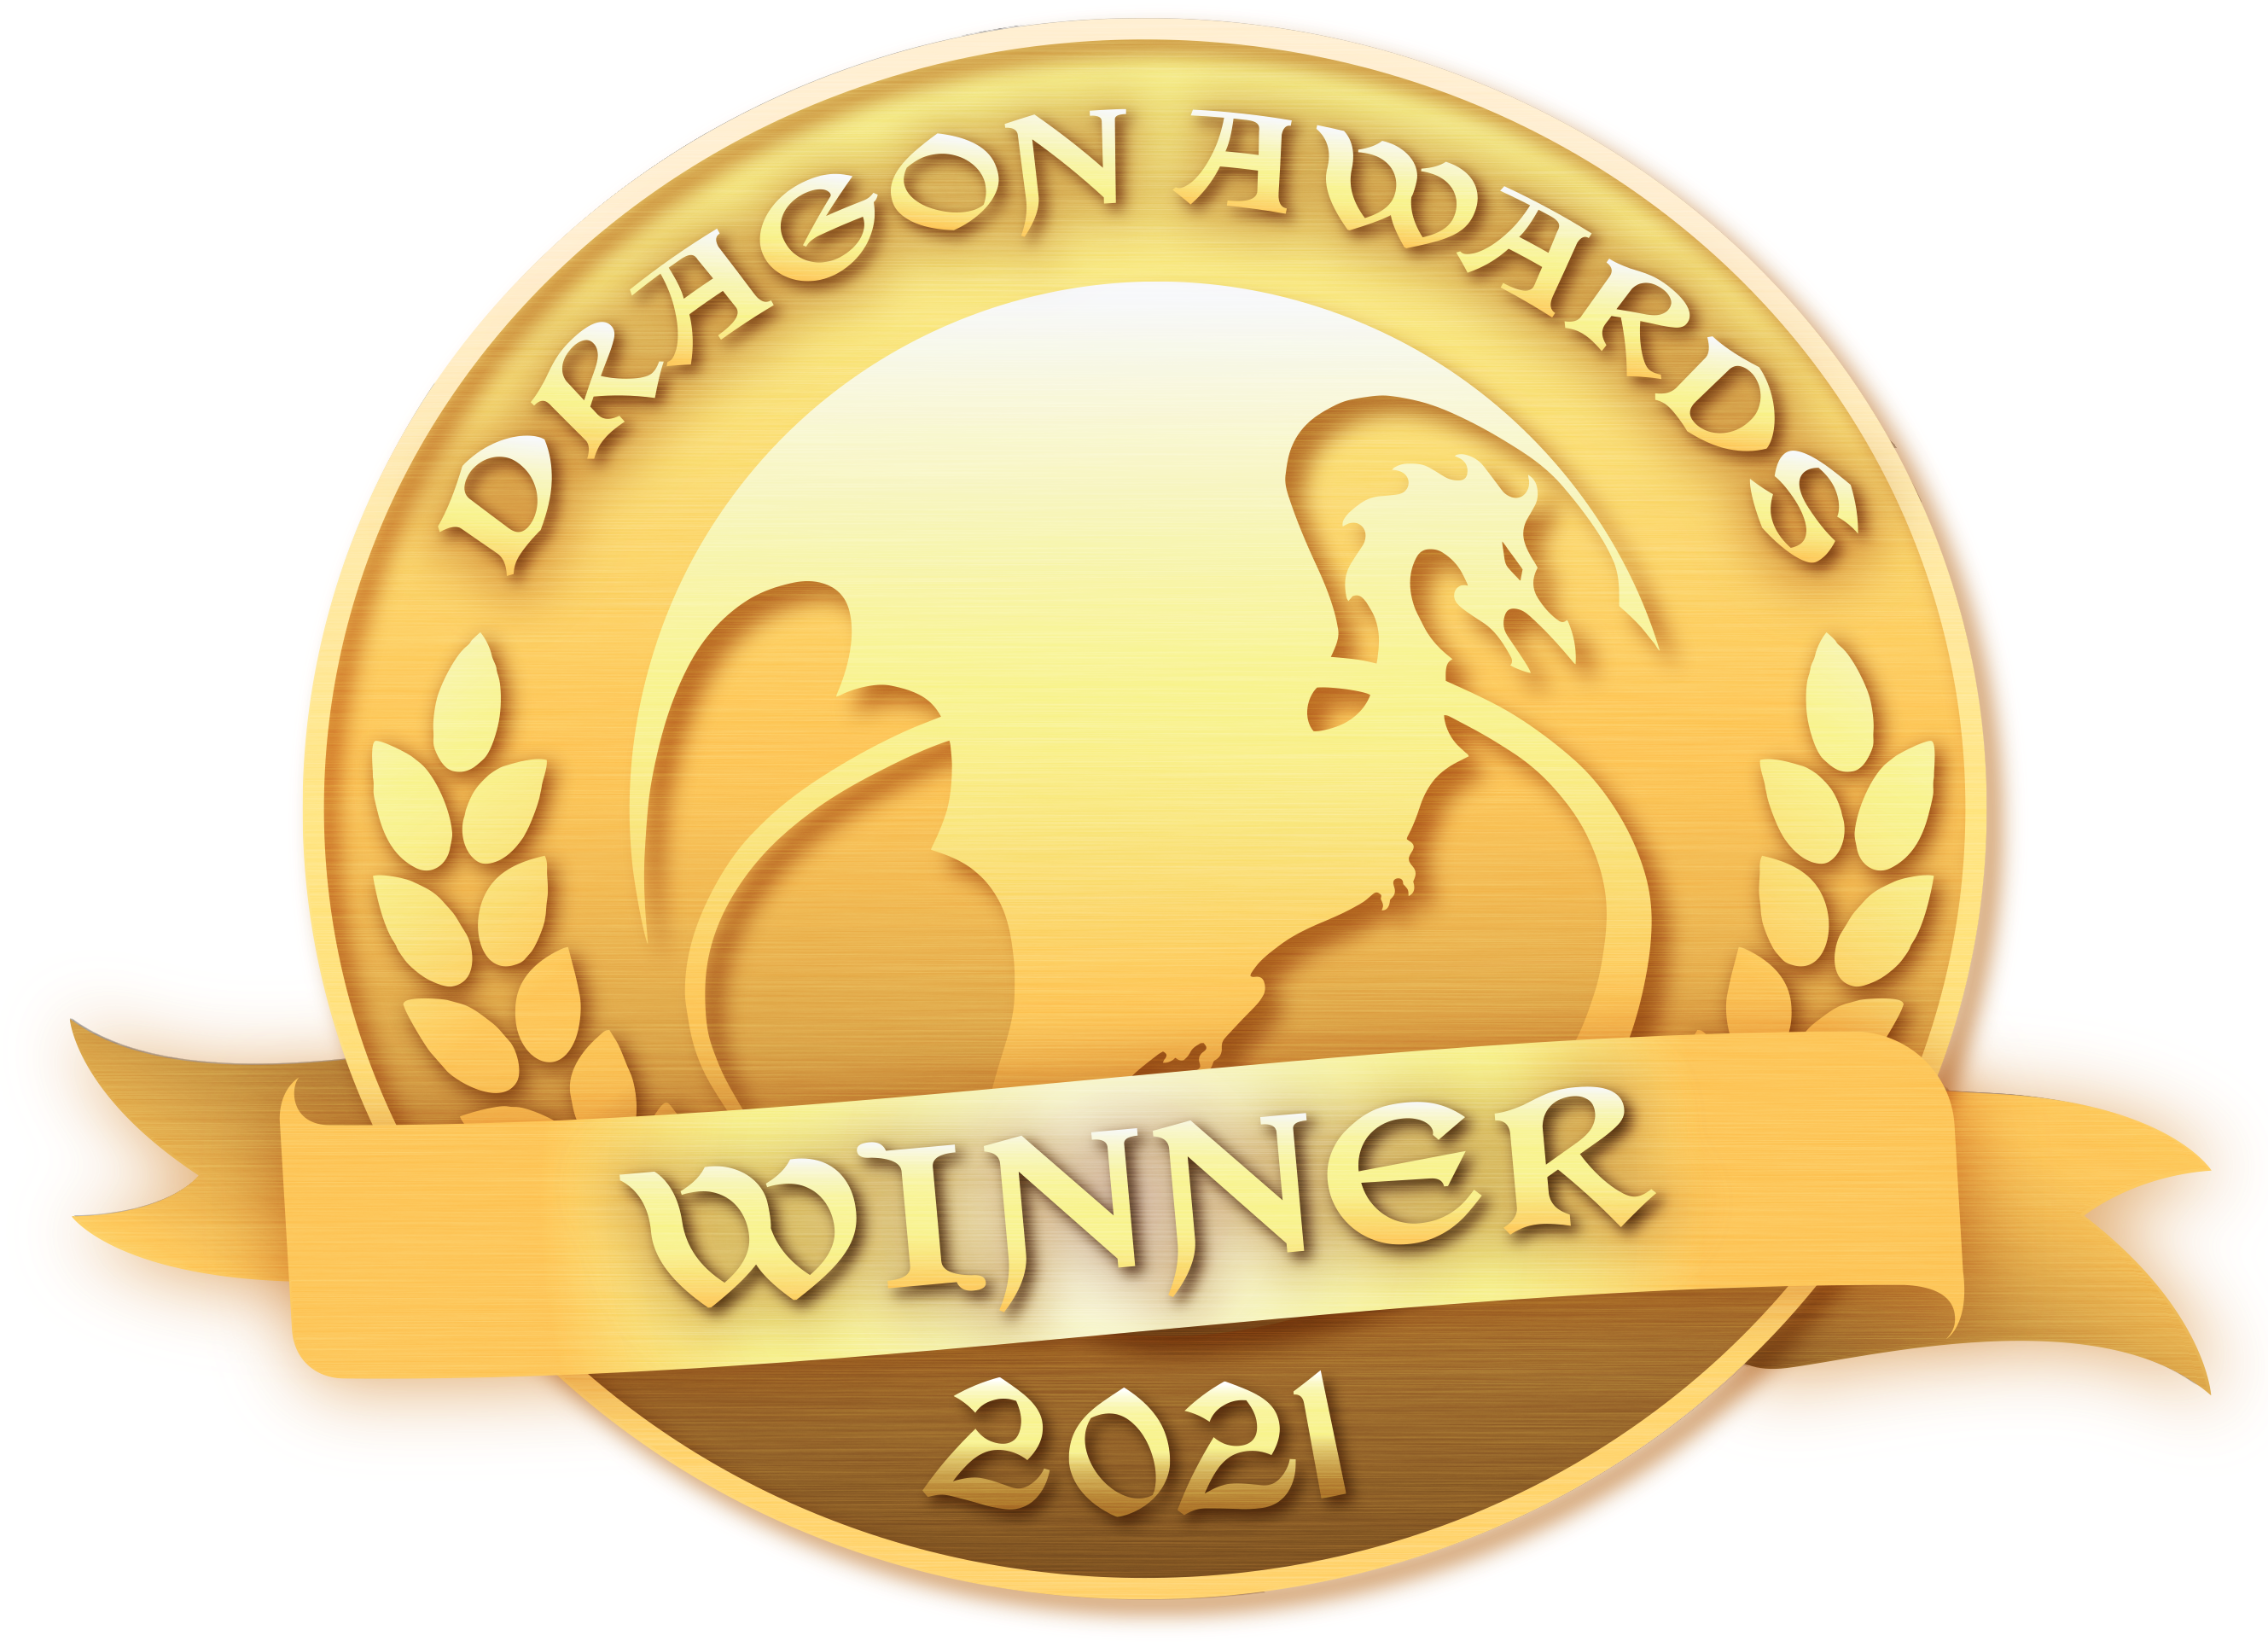 Dragon Award: 2021